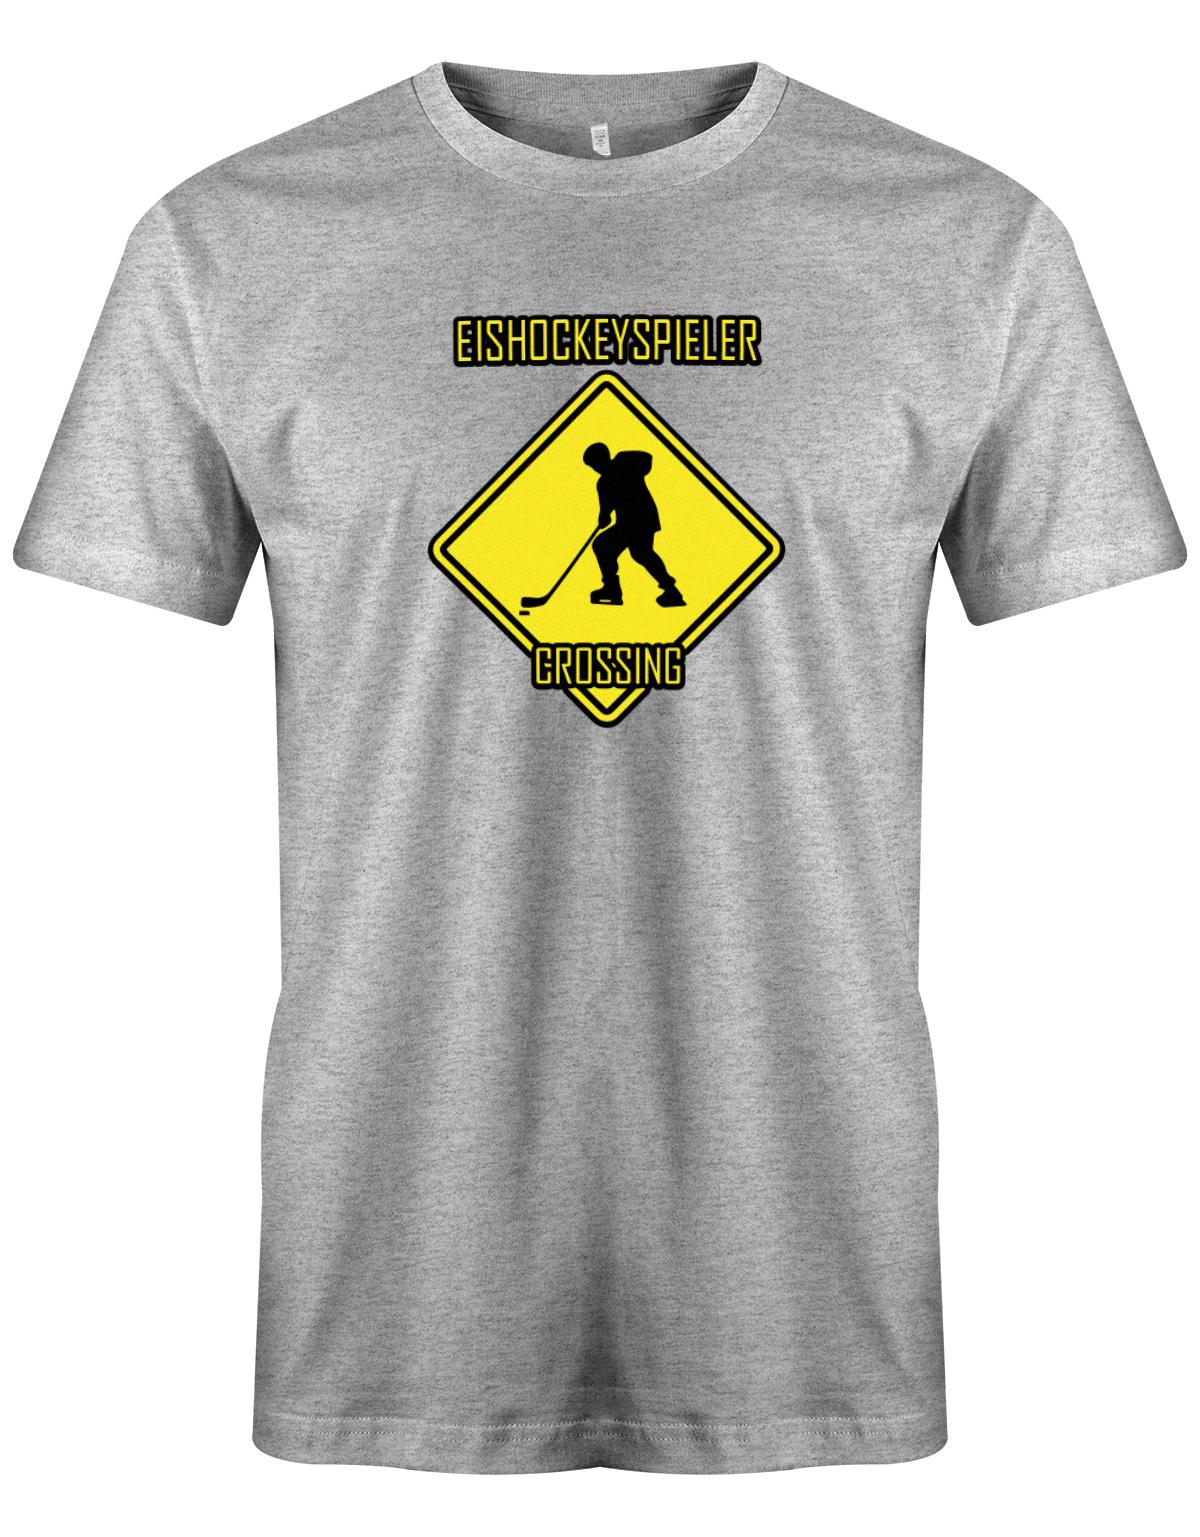 Eishockeyspieler-Crossing-Eishockey-Shirt-Herren-Grau